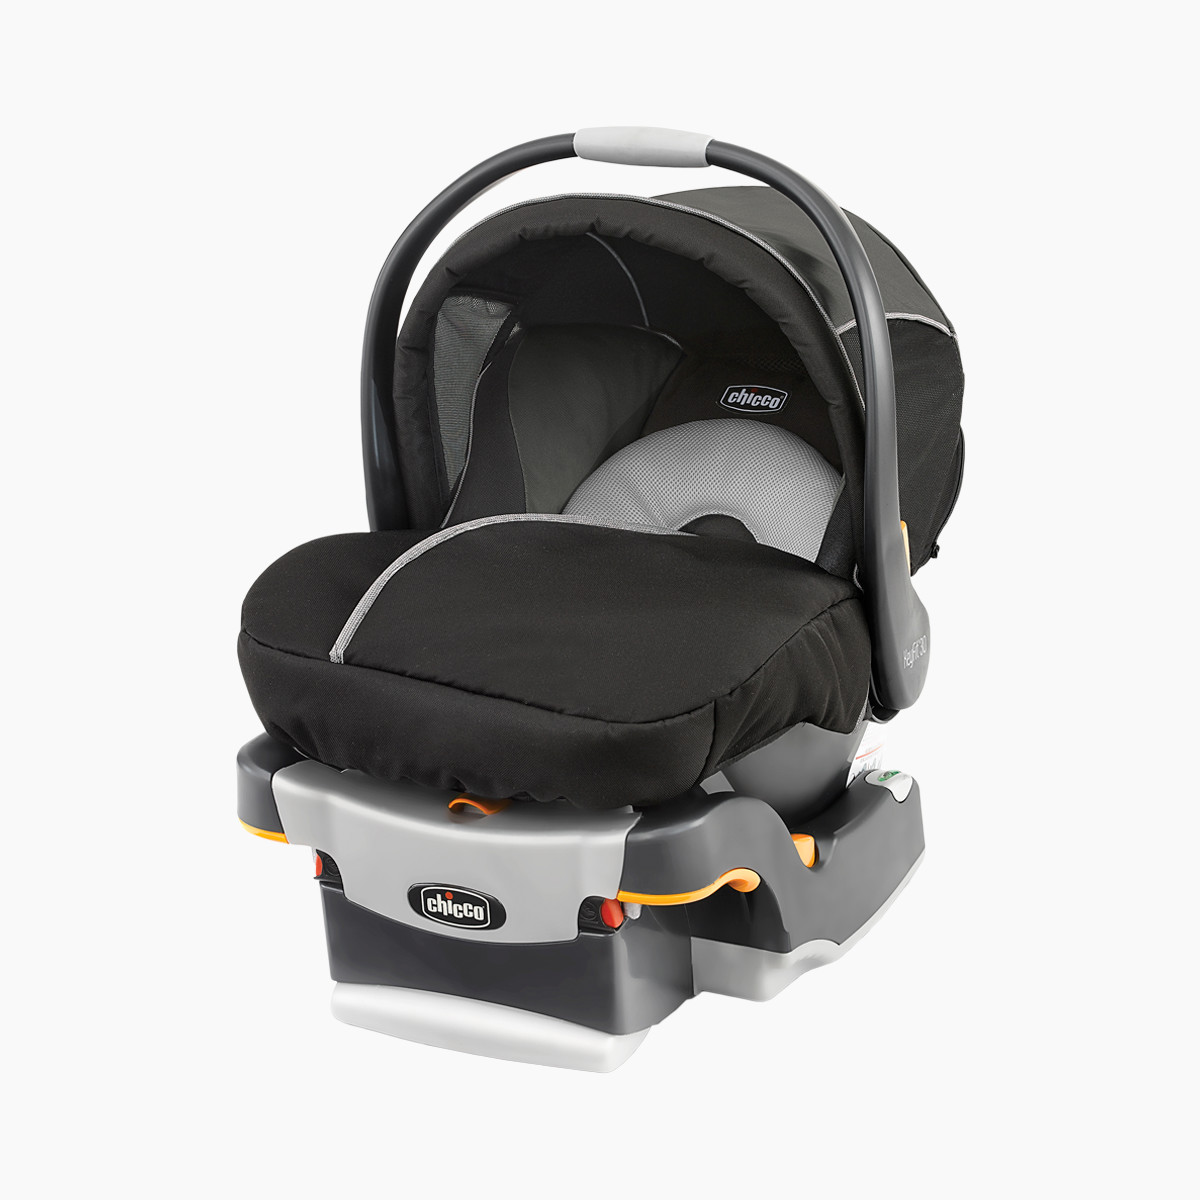 Chicco KeyFit 30 Magic Infant Car Seat - Coal.